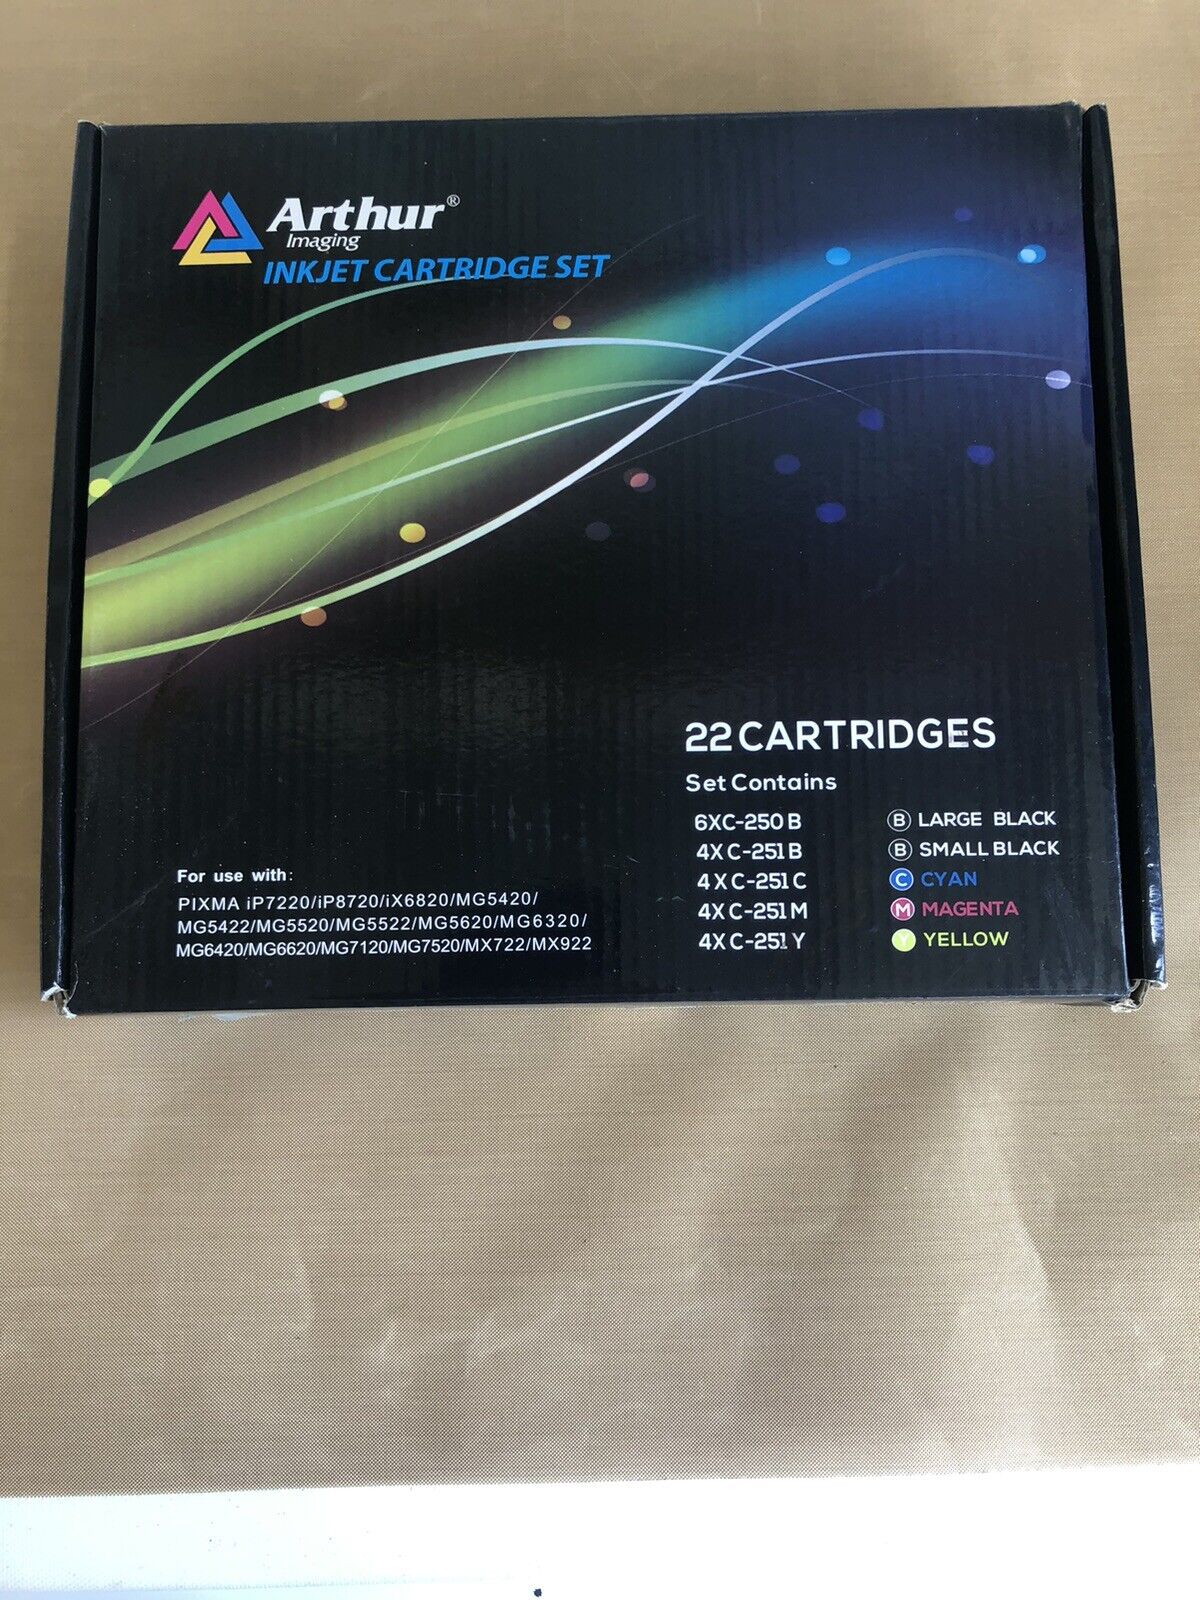 Arthur imaging ikjet cartridge set 22 cartridges